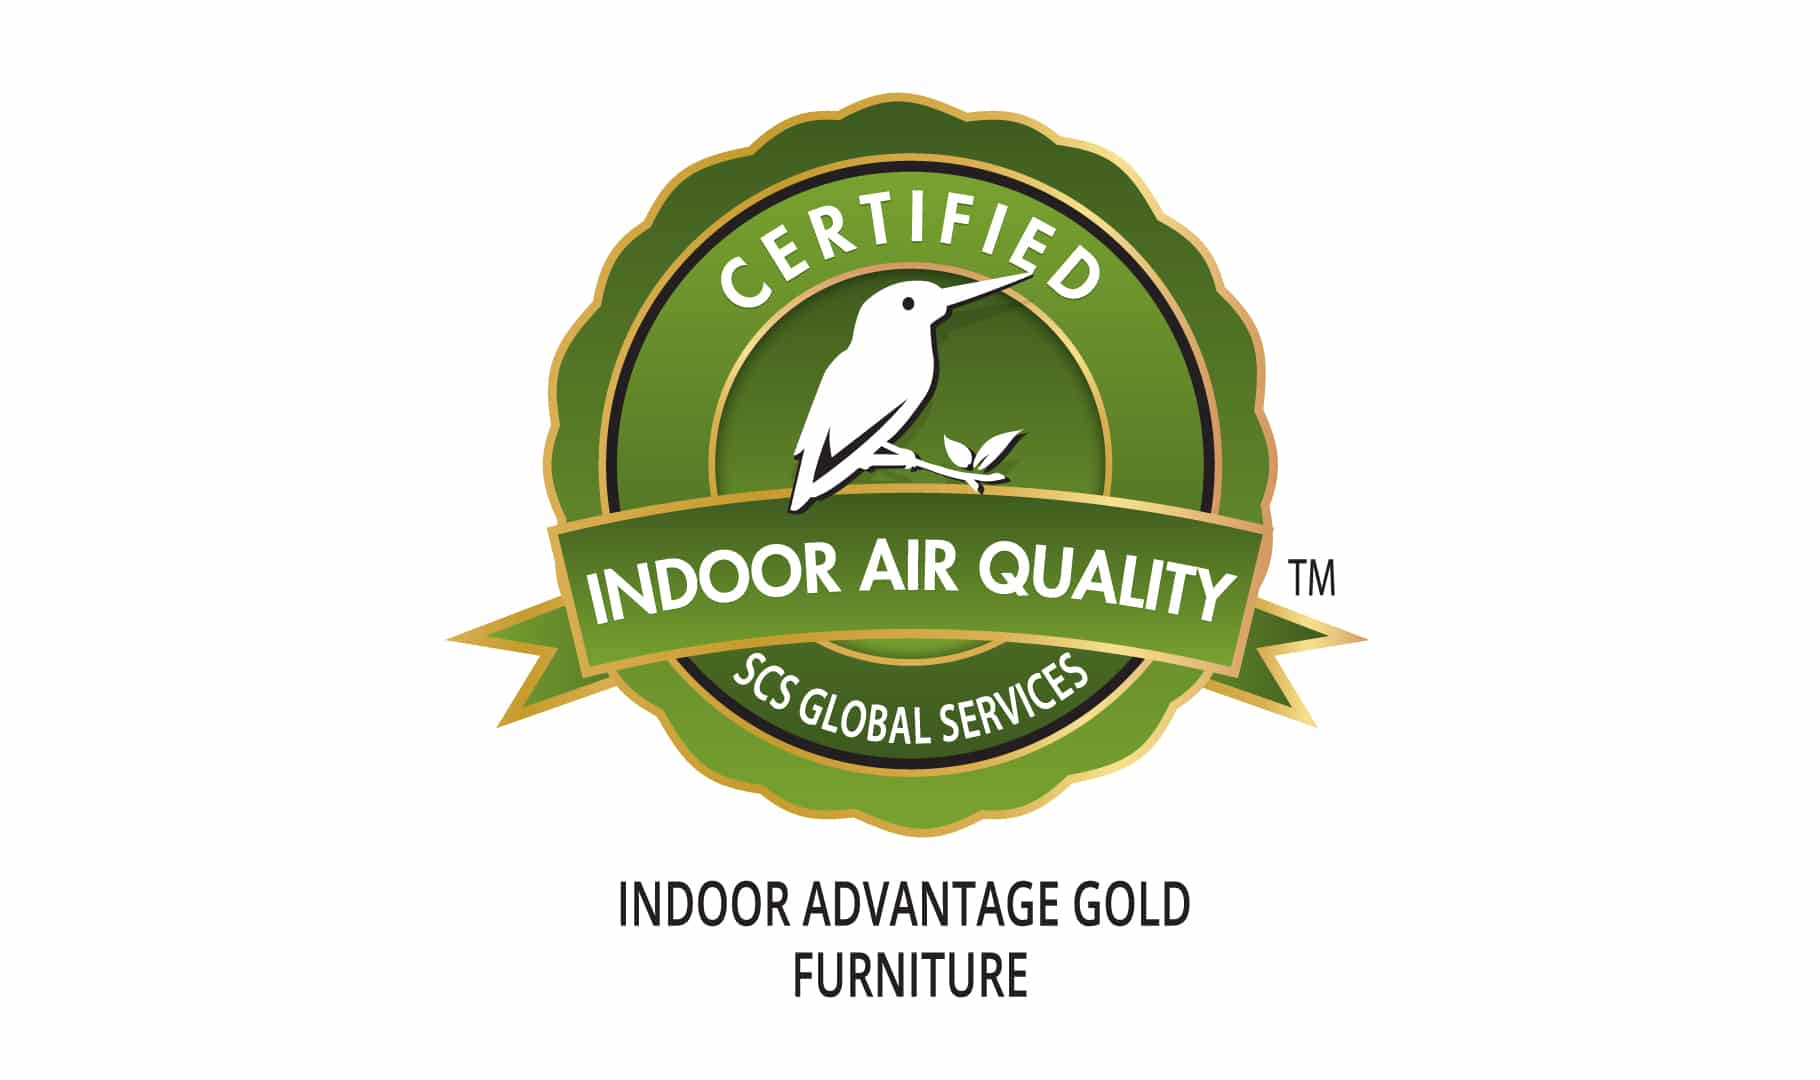 Indoor advantage gold furniture